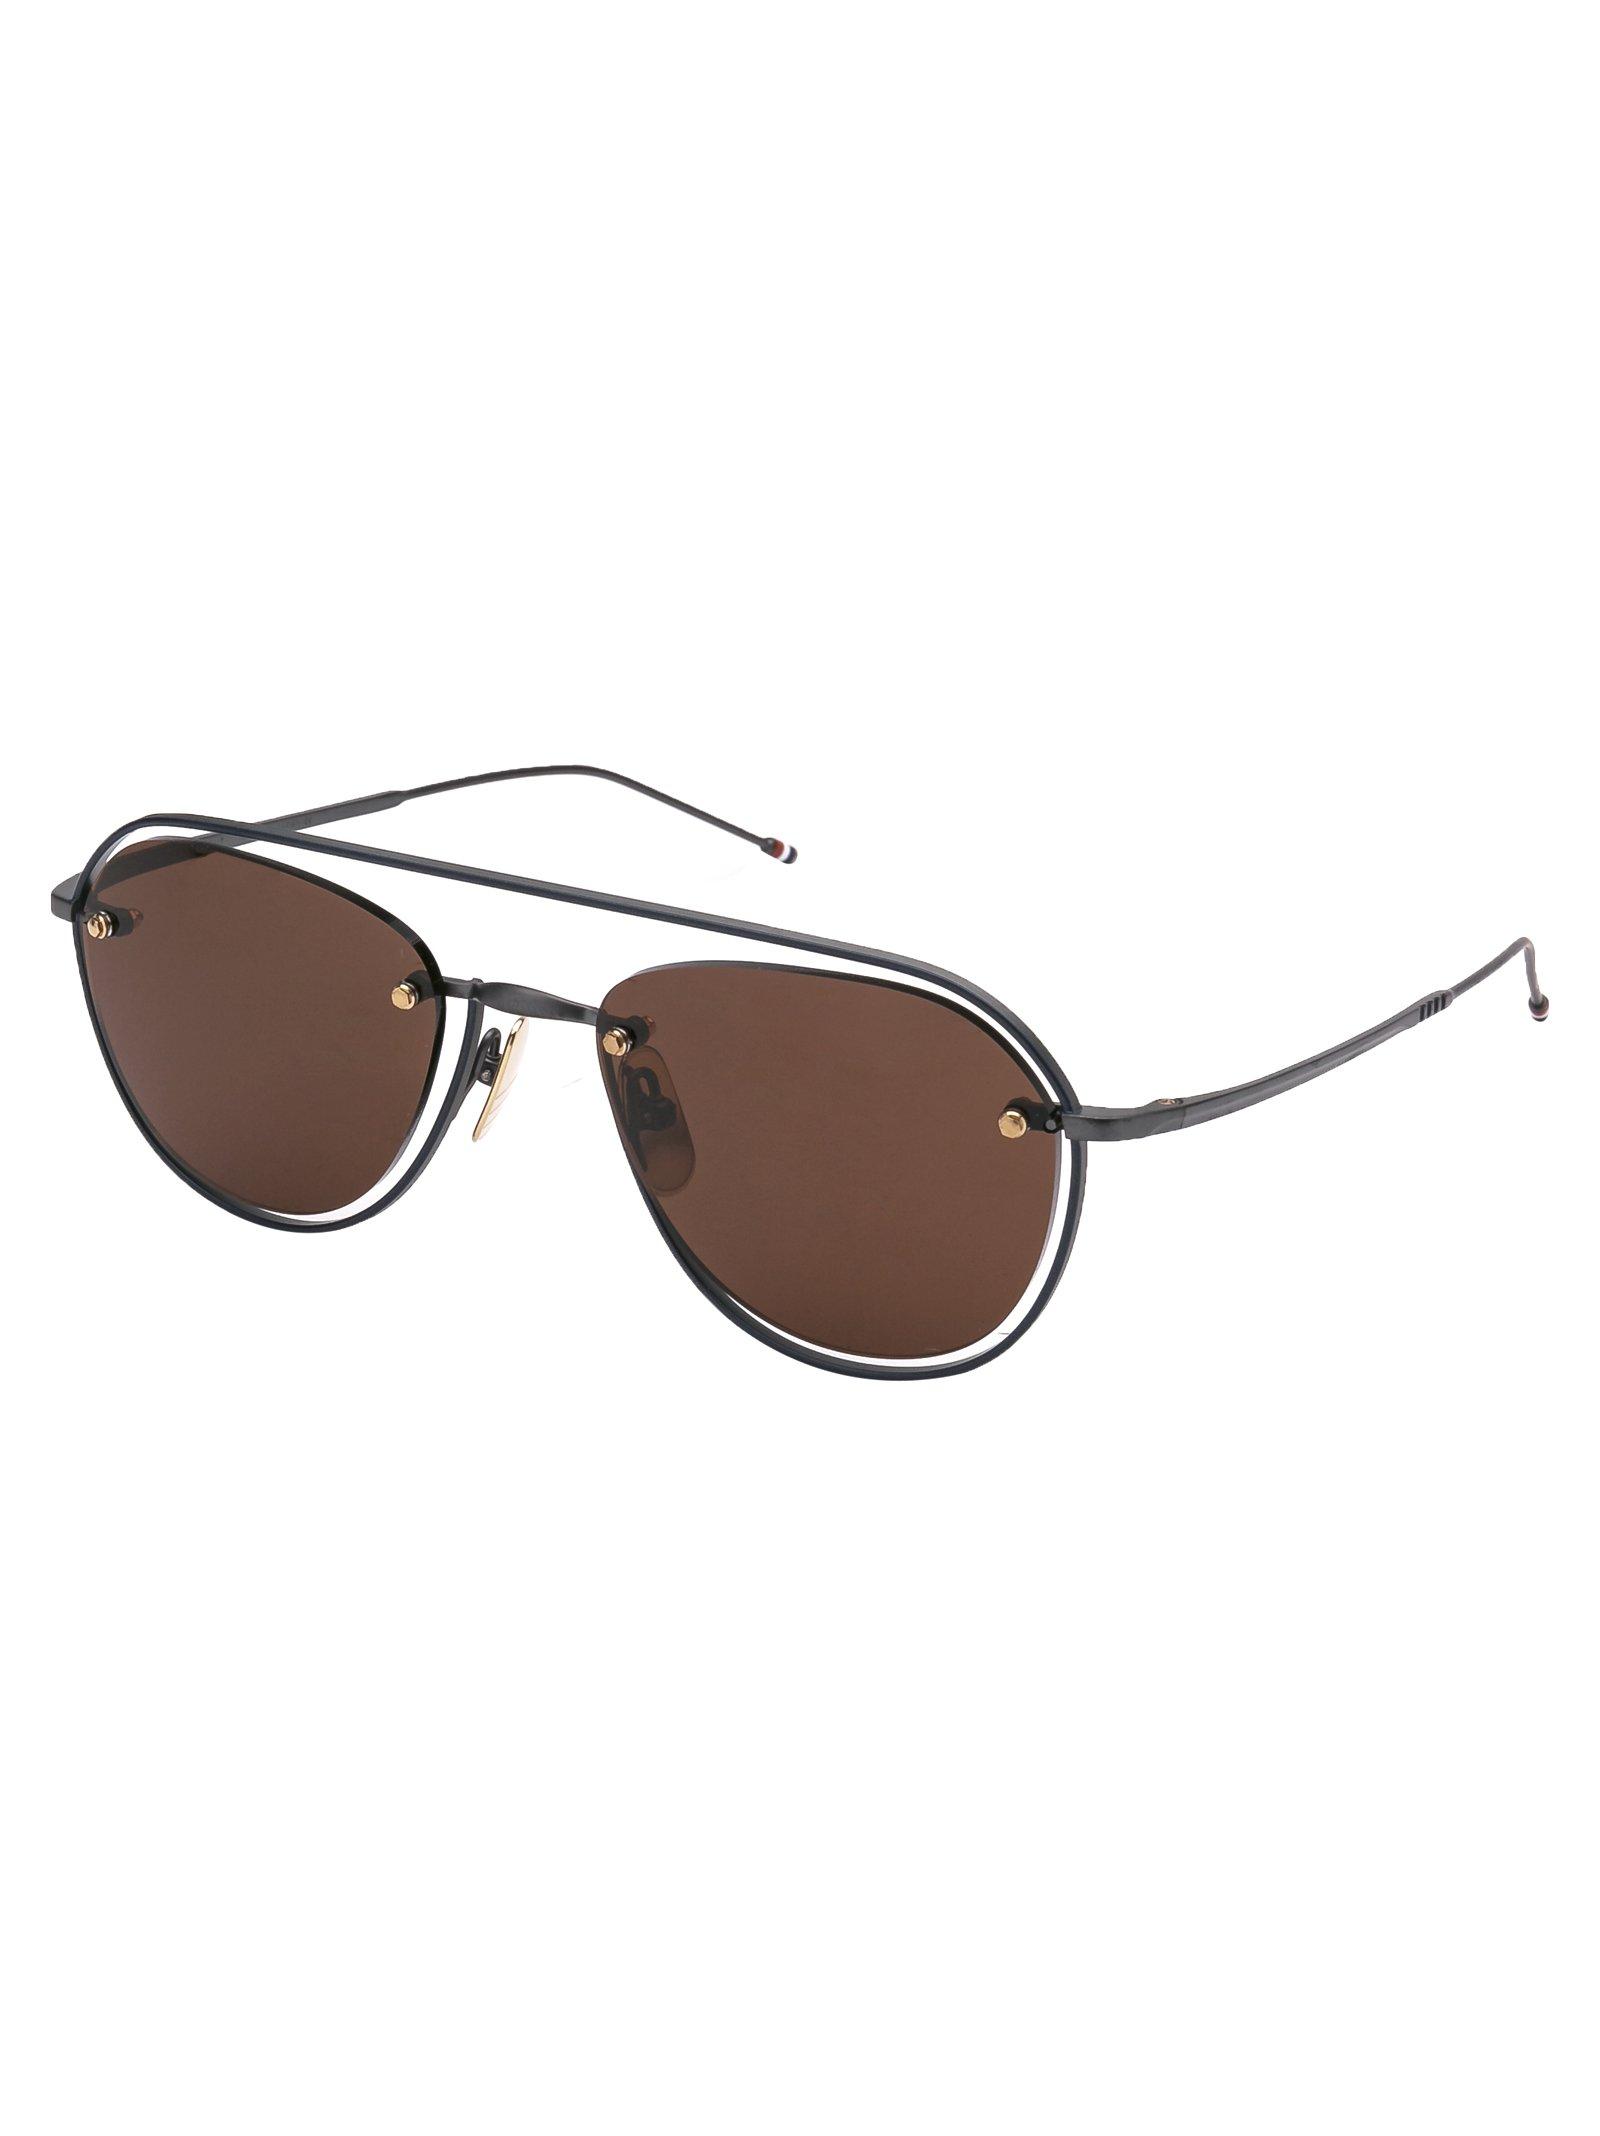 Thom Browne Aviator Frame Sunglasses in Black for Men - Lyst